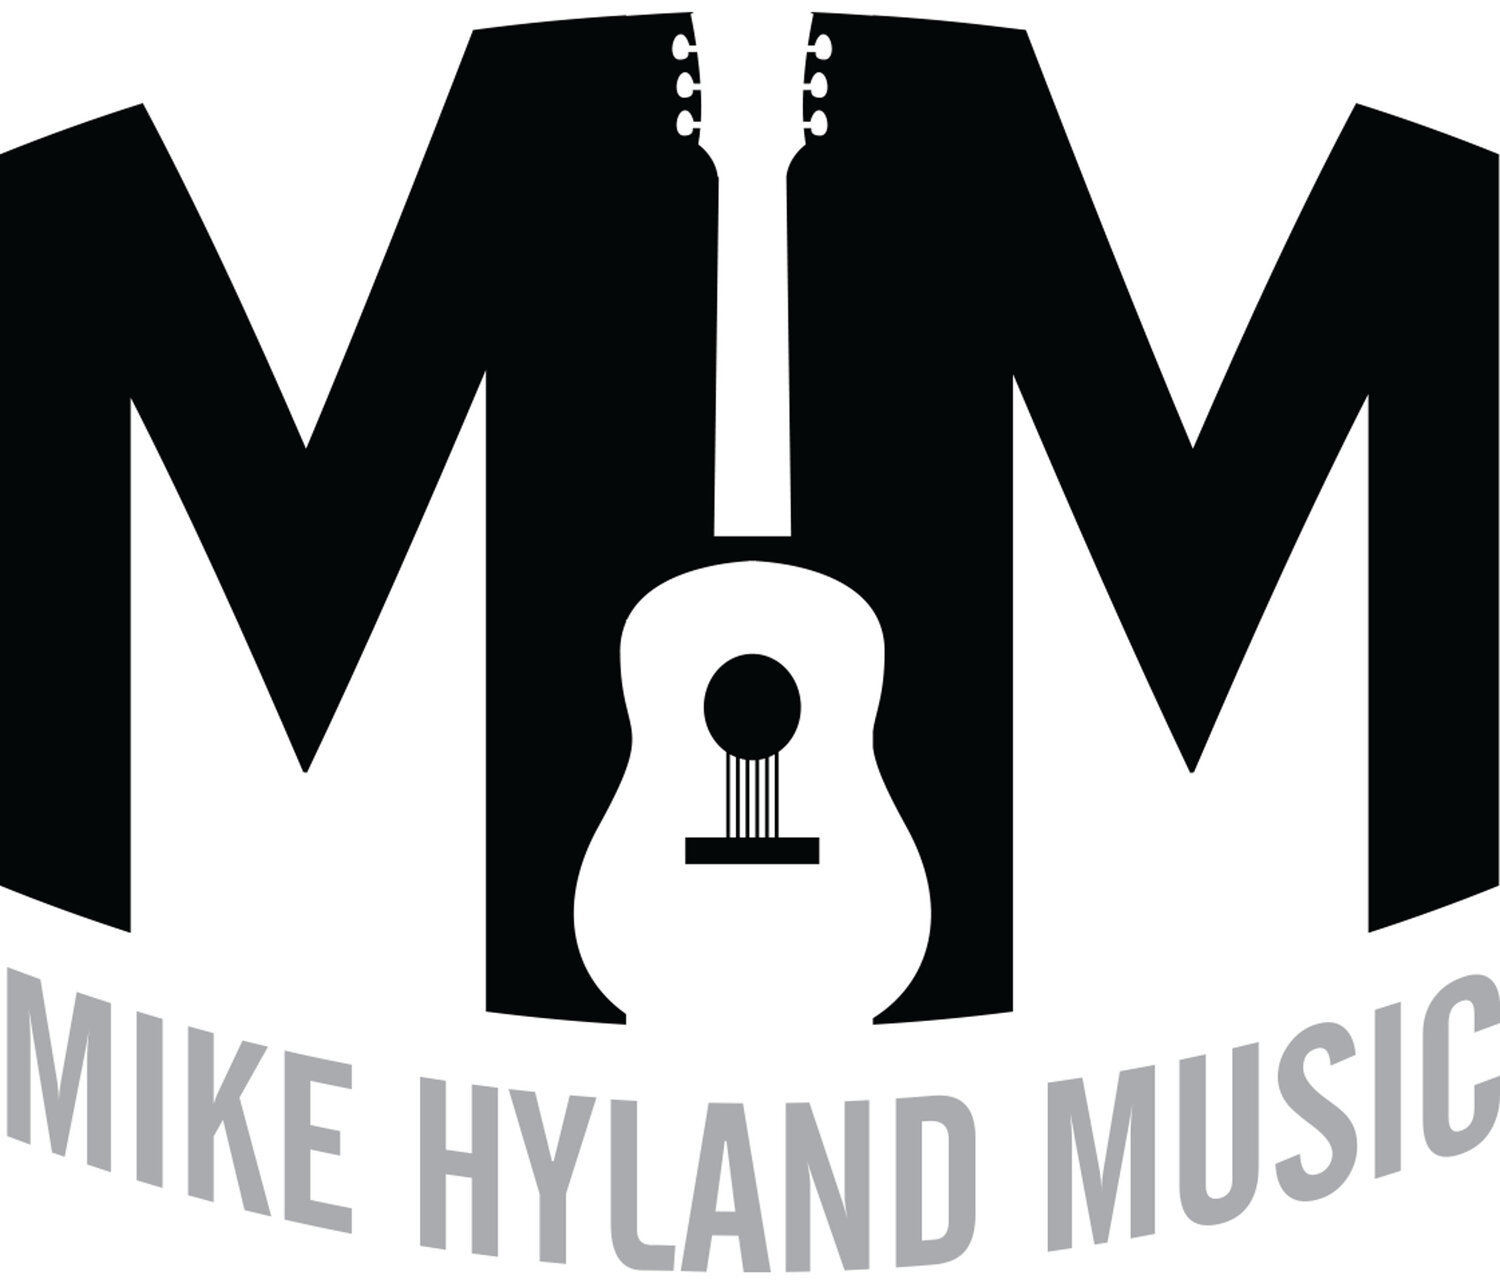 Mike Hyland Music